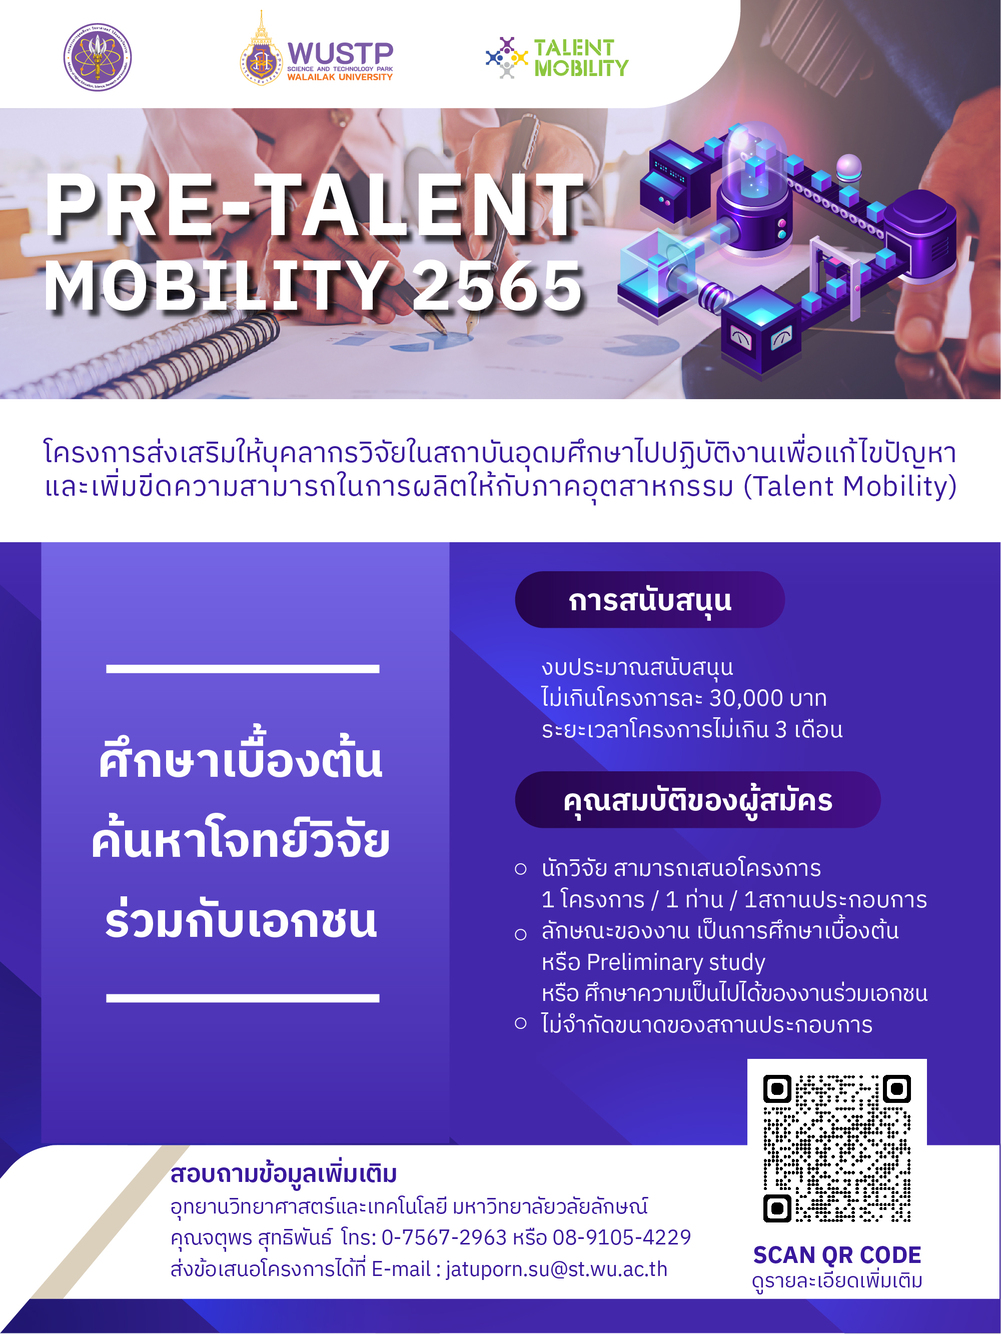 Pre-Talent Mobility 2565